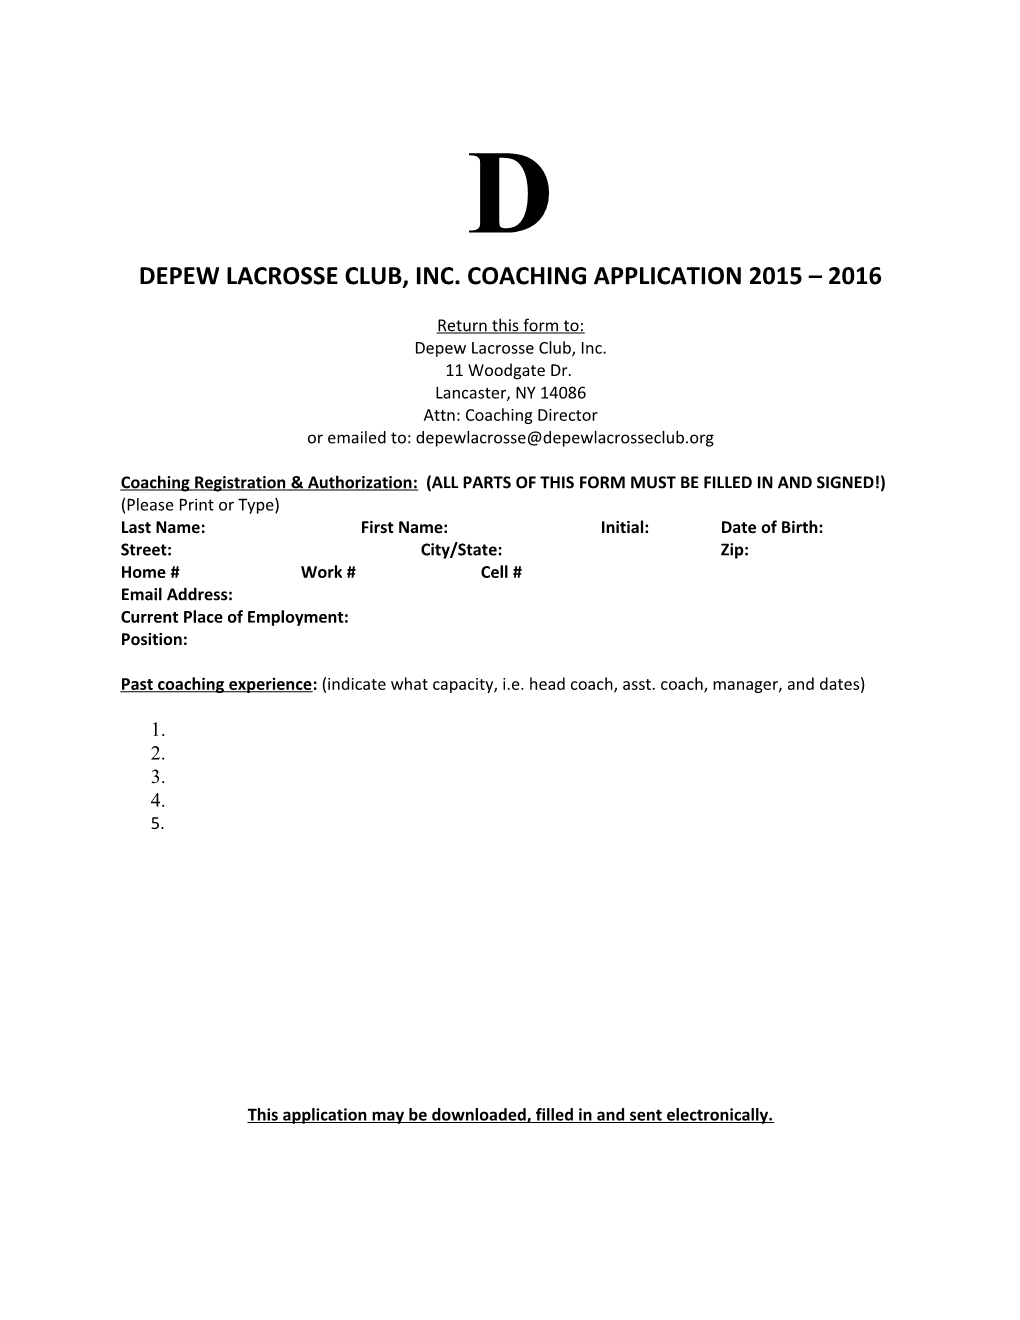 Depew Lacrosse Club, Inc. Coaching Application 2015 2016